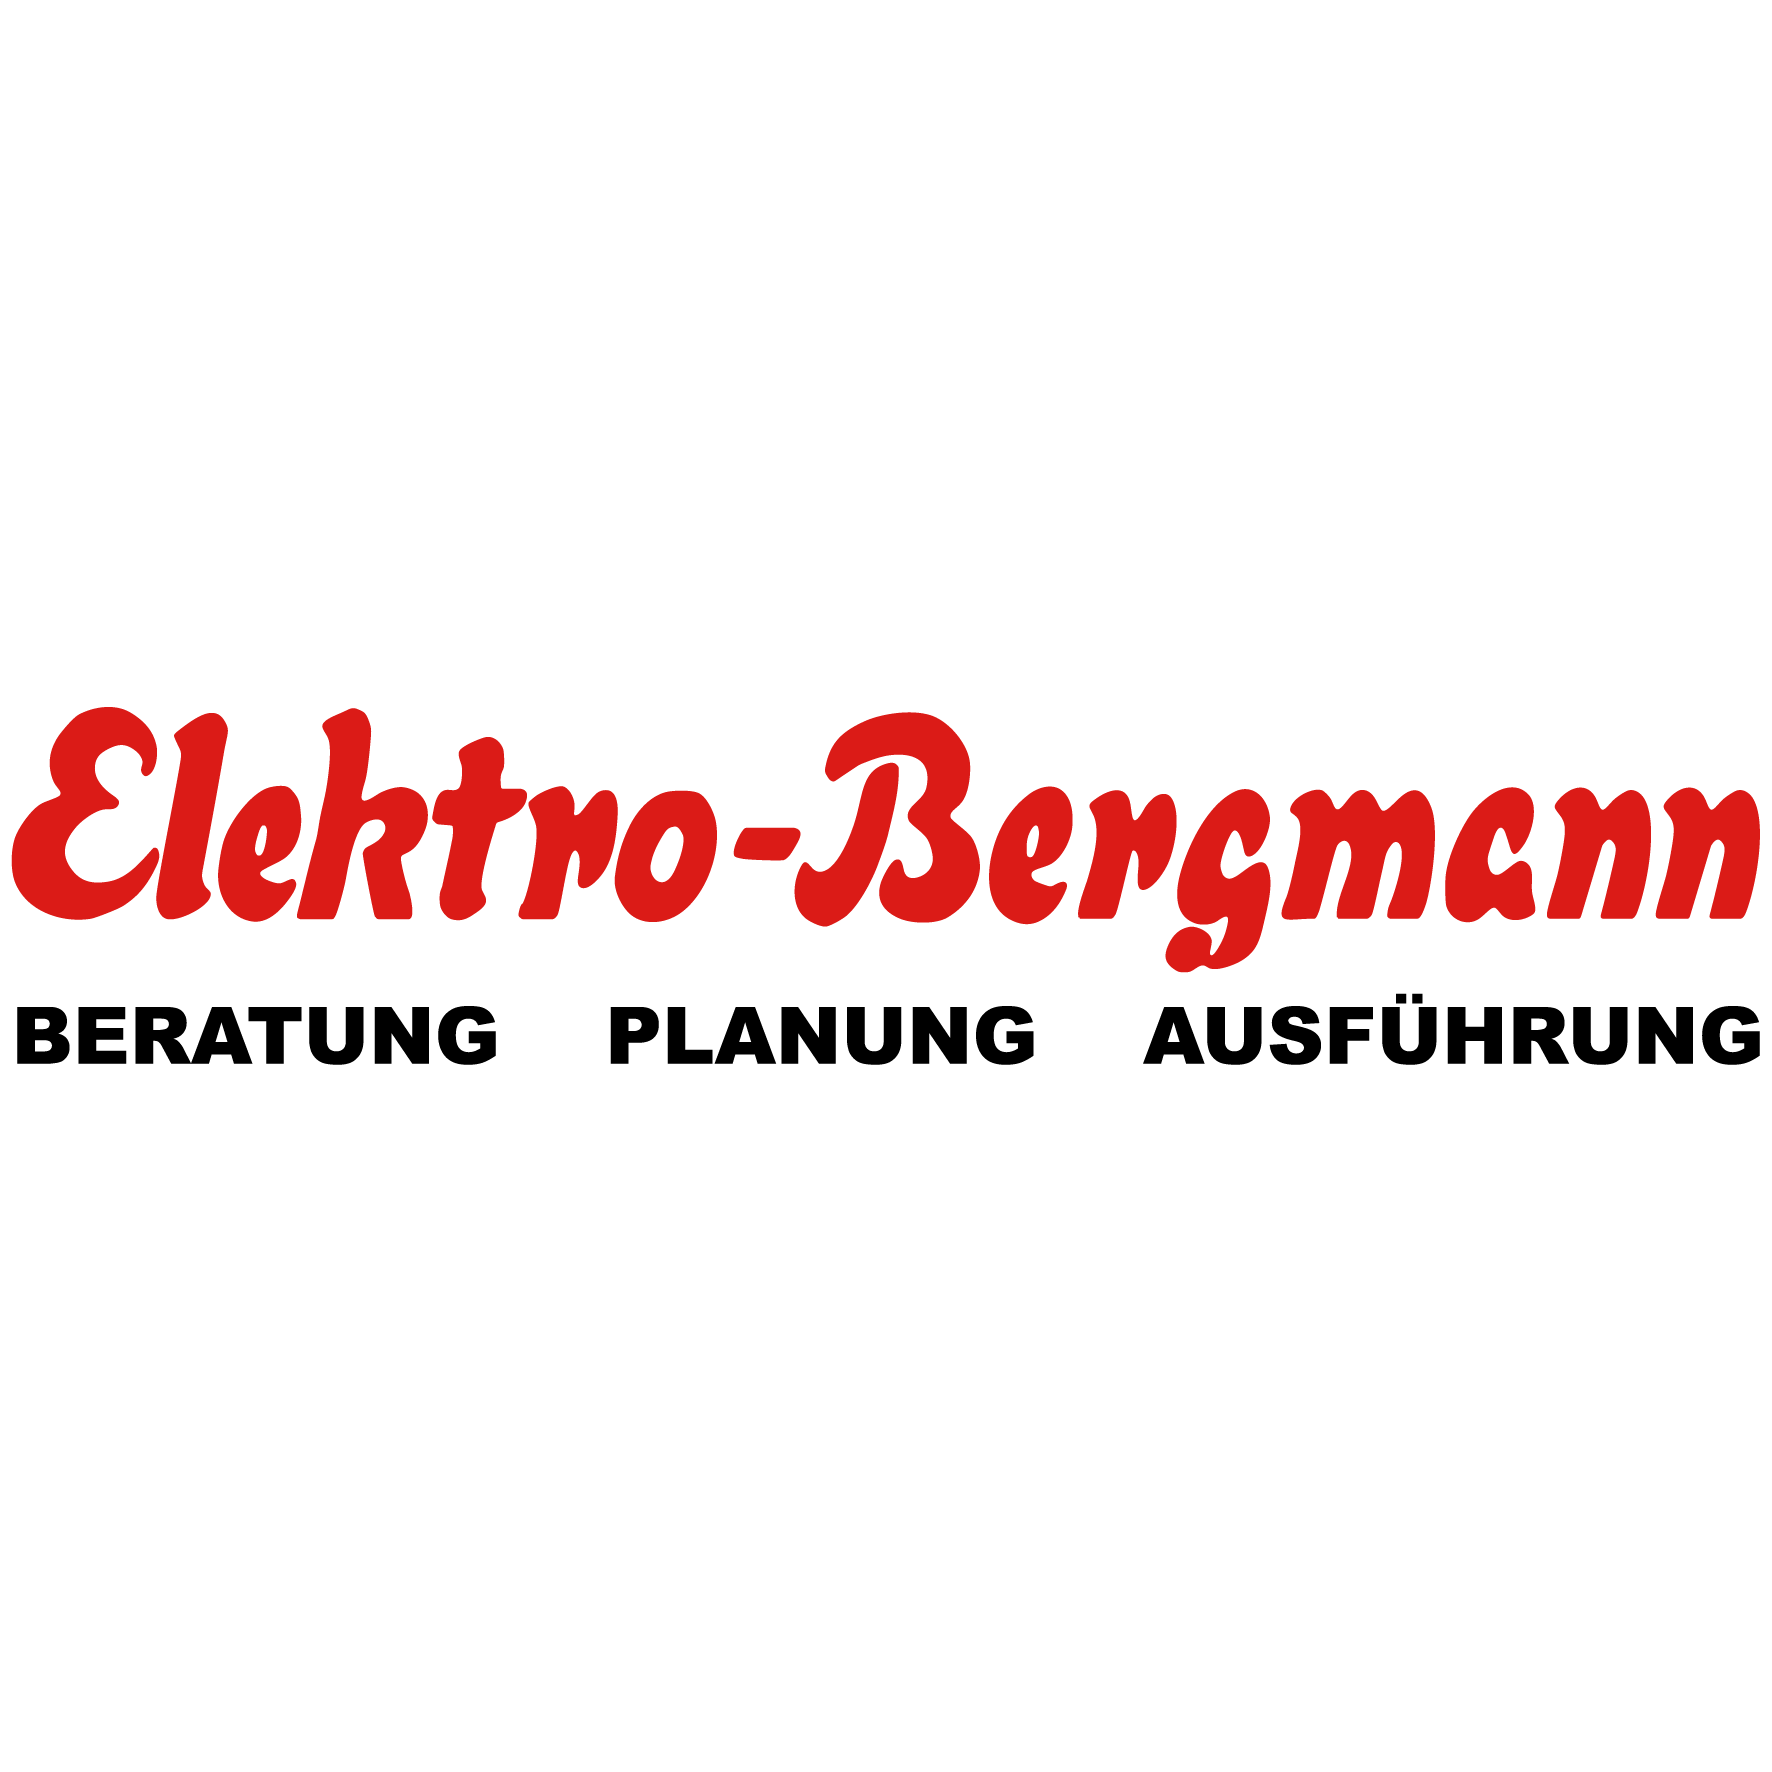 ELEKTRO-BERGMANN GMBH  